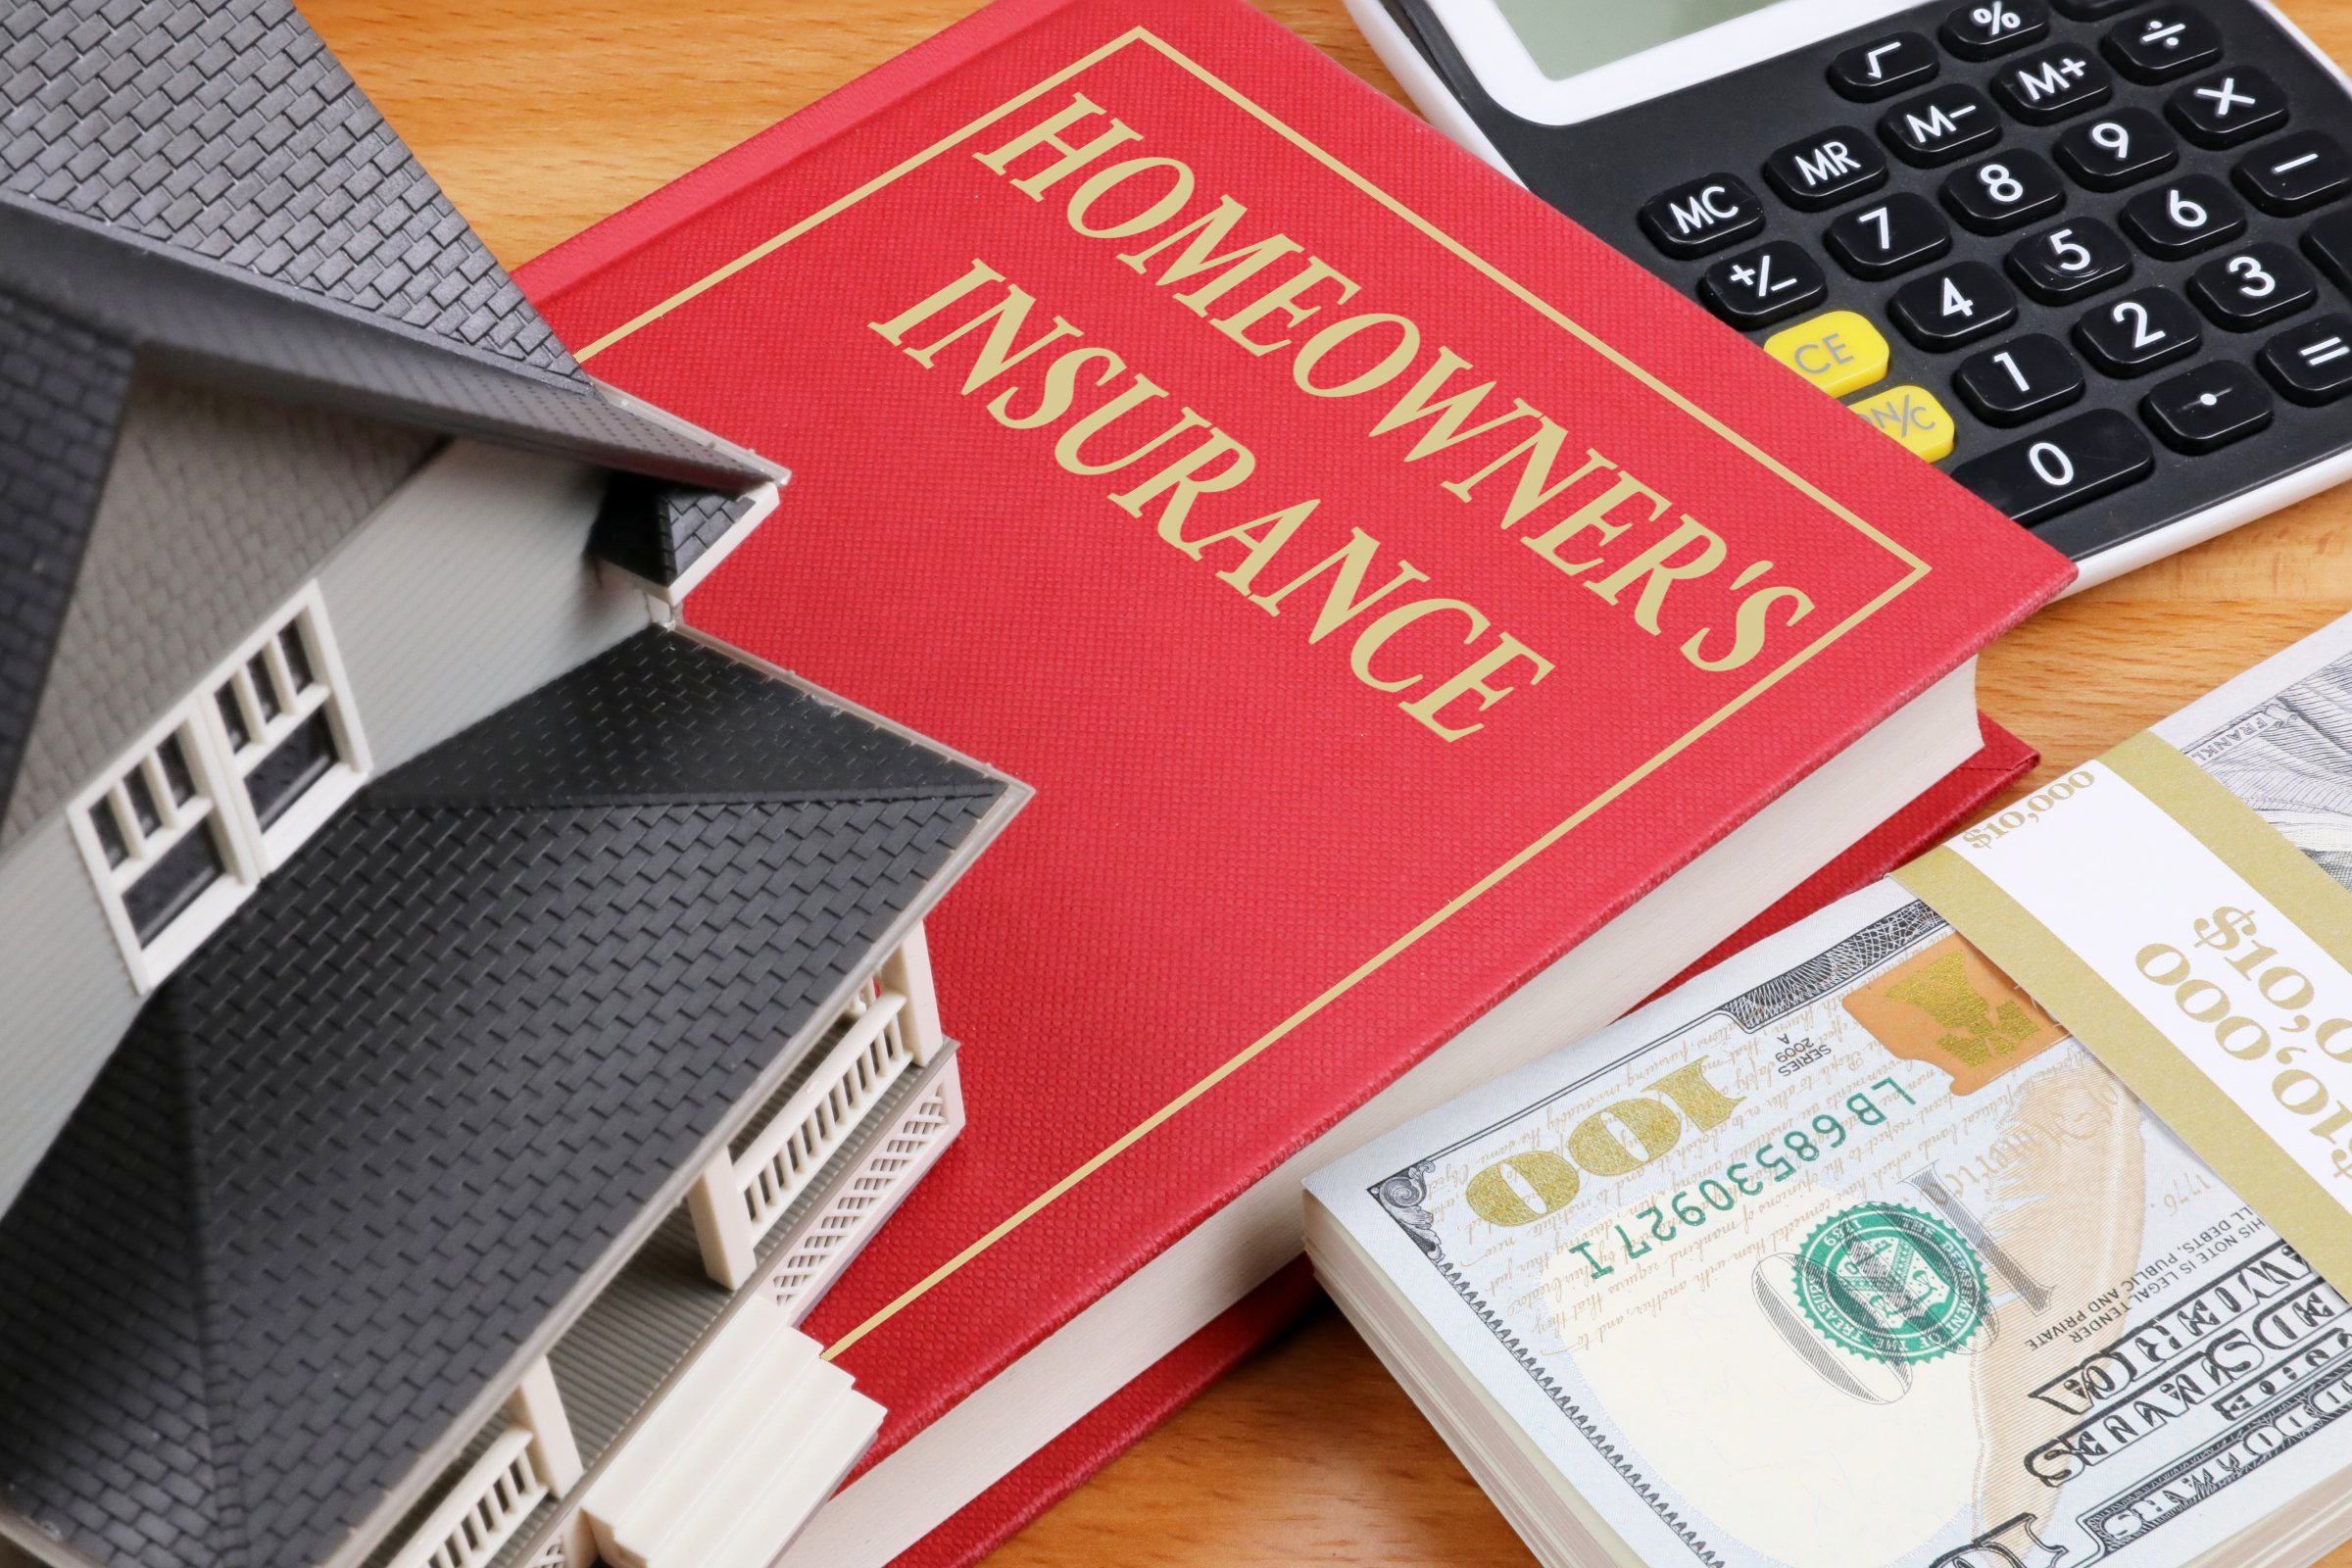 homeowners insurance